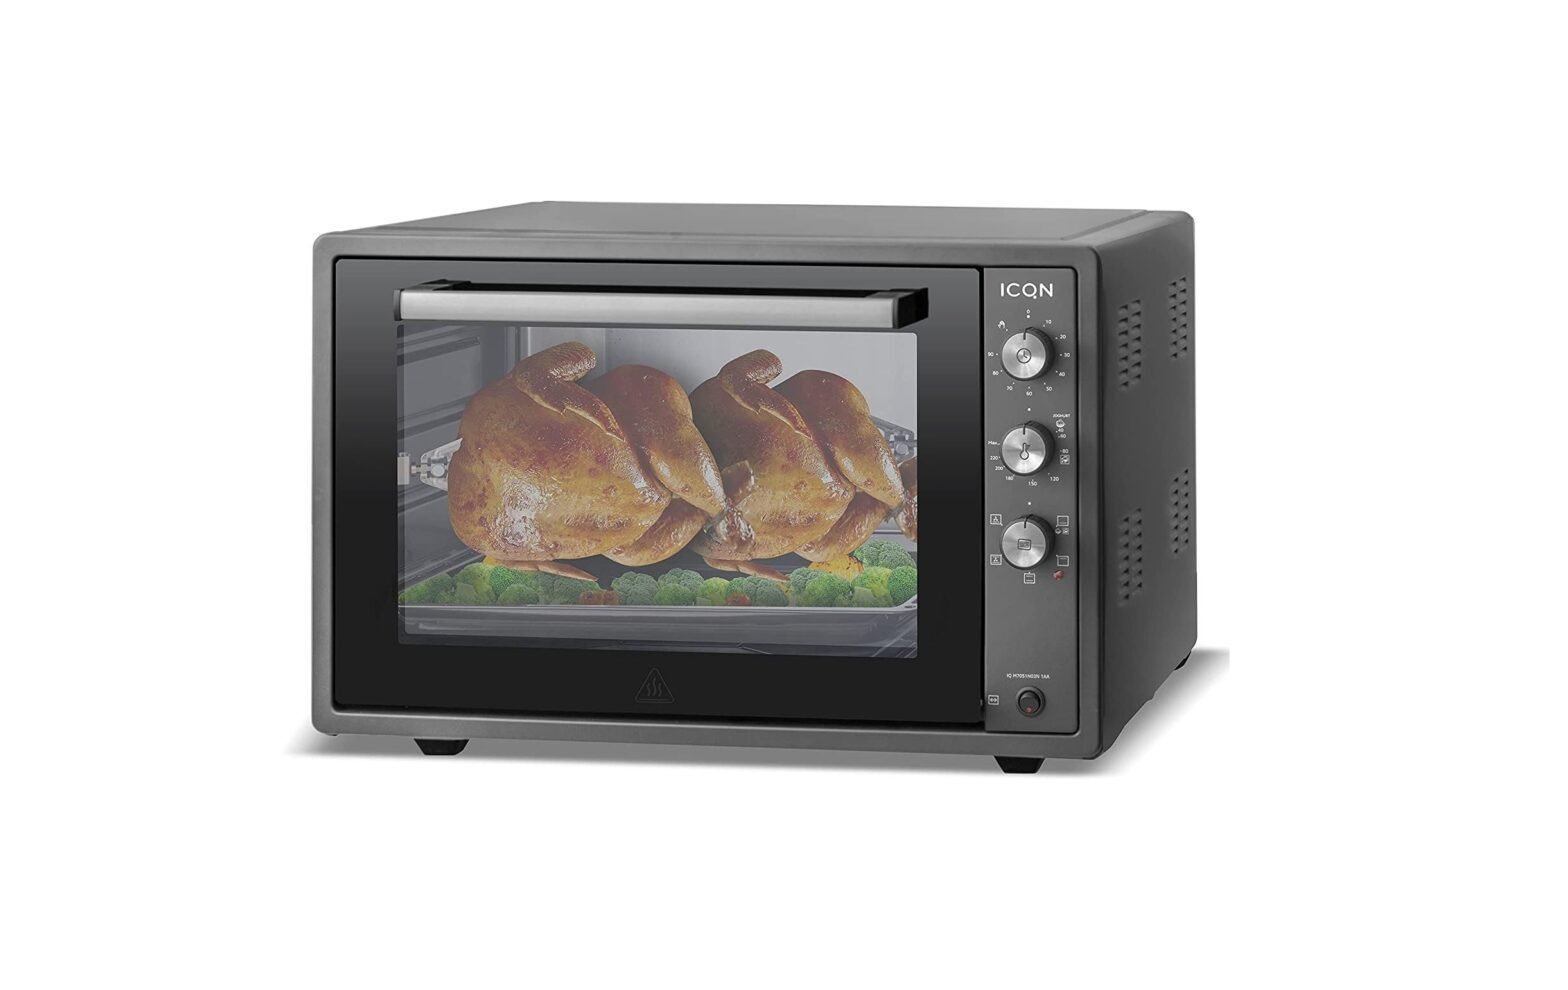 ICQN IQ M7051N03N 1 60 Litre XXL Mini Oven User Manual - Featured image